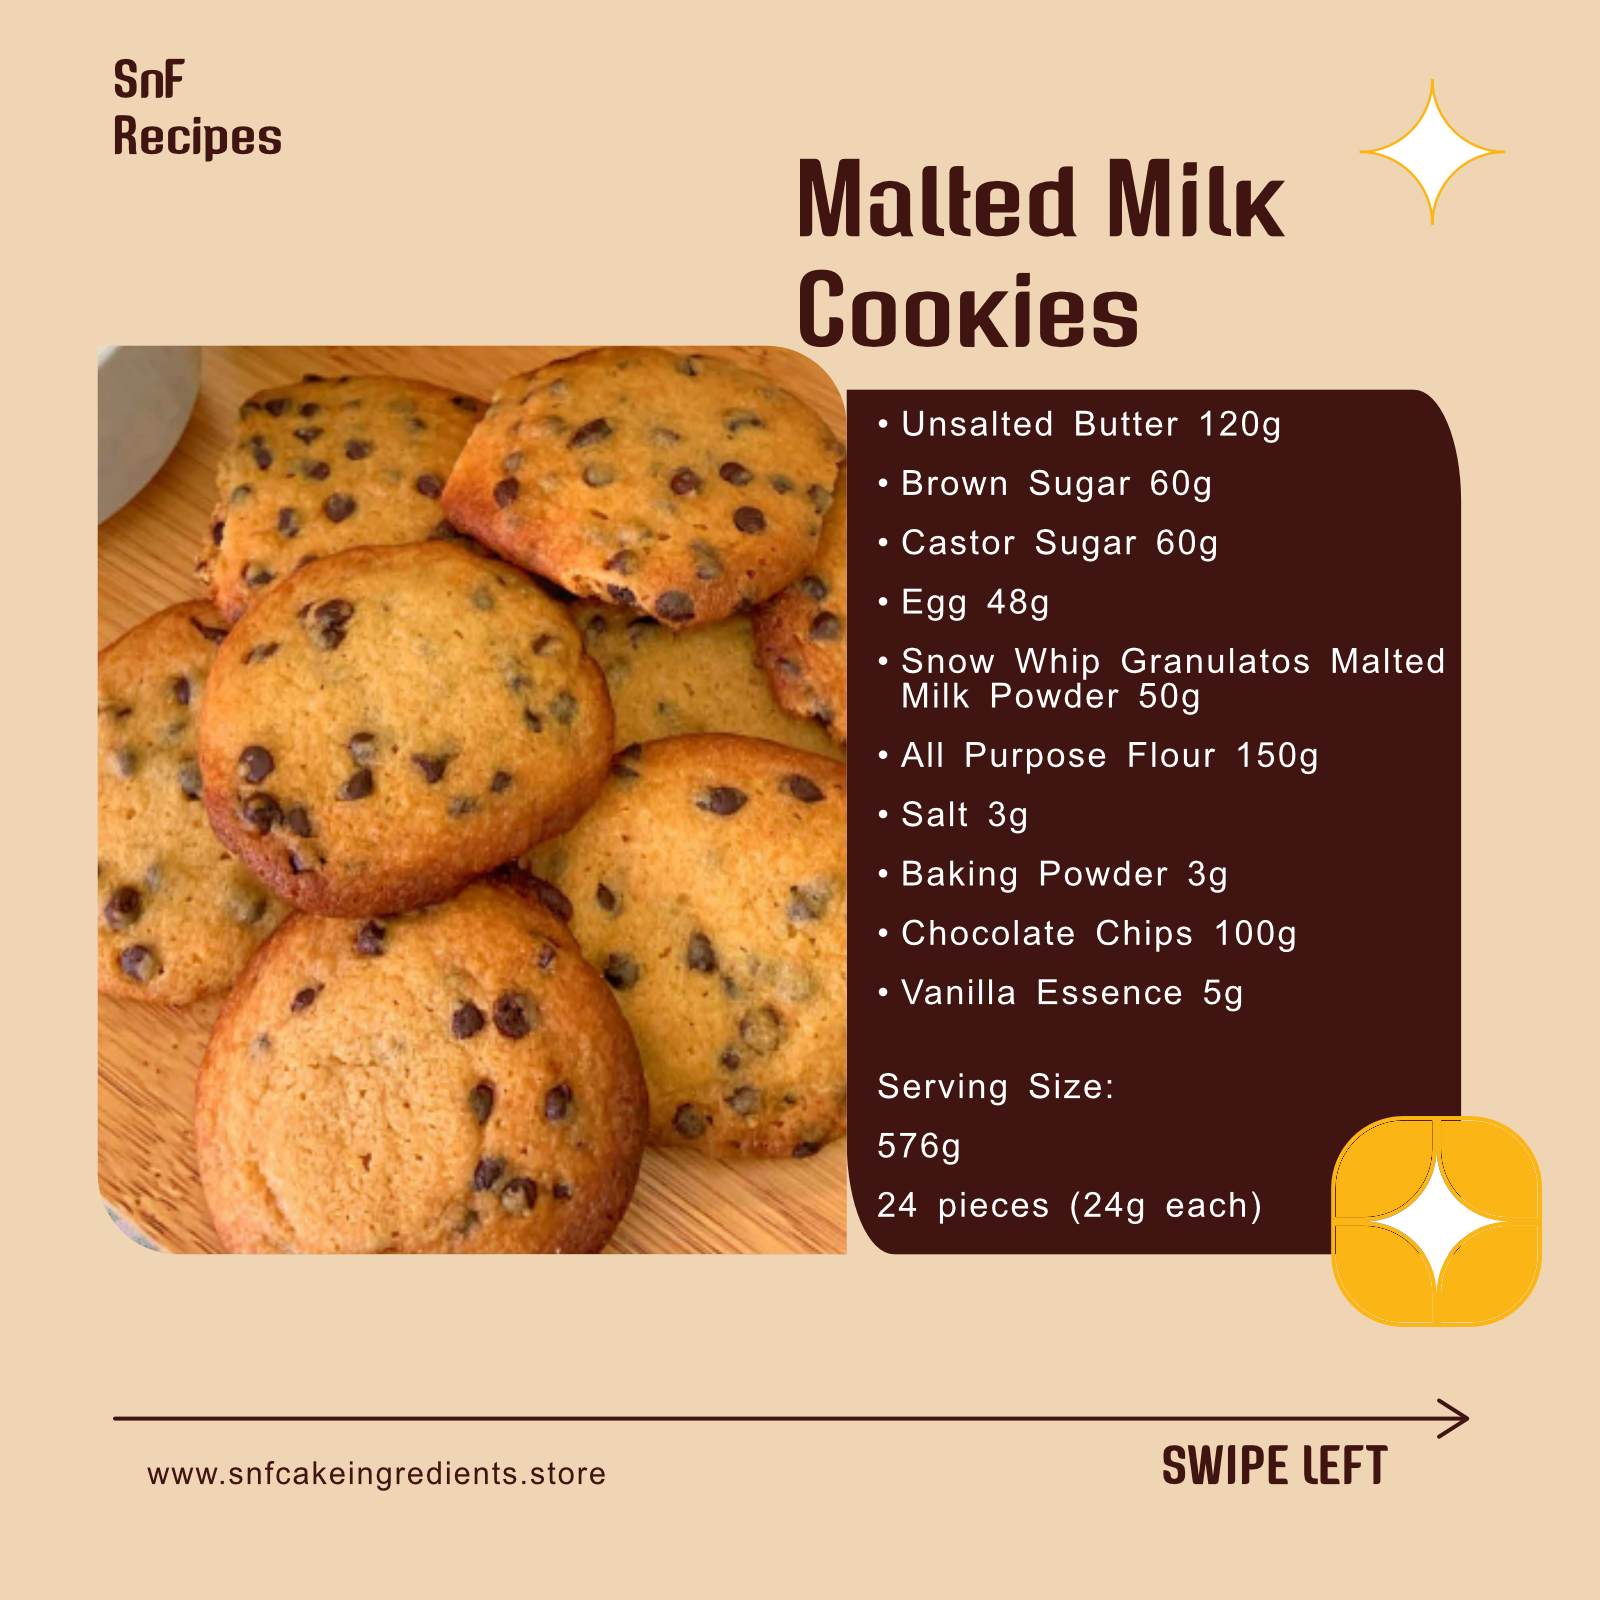 Malted Milk Cookies